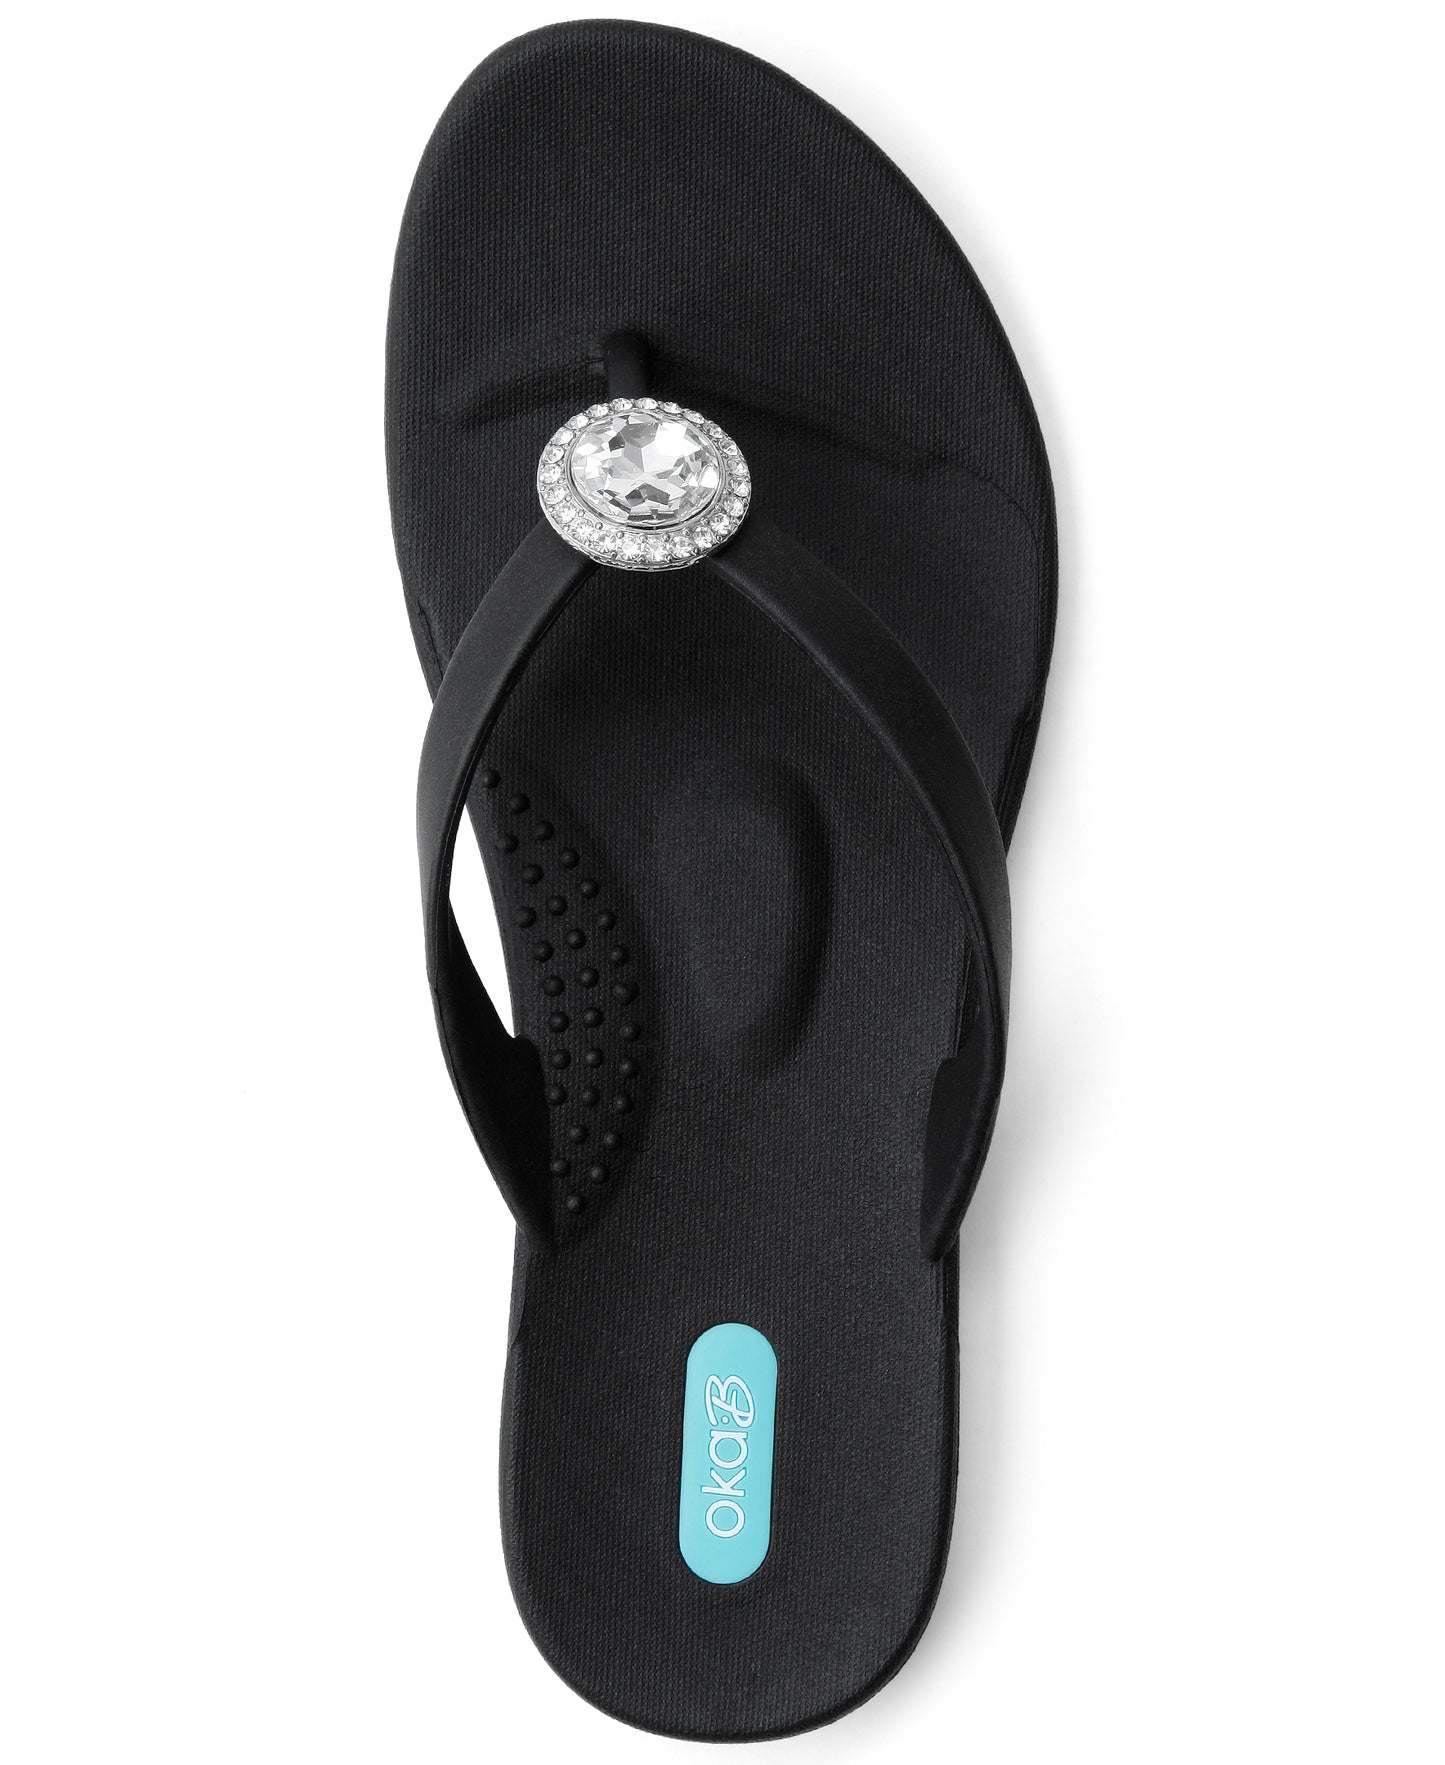 Oka-B Halo Women's Sandal with Brilliant, Sparkling Pendant